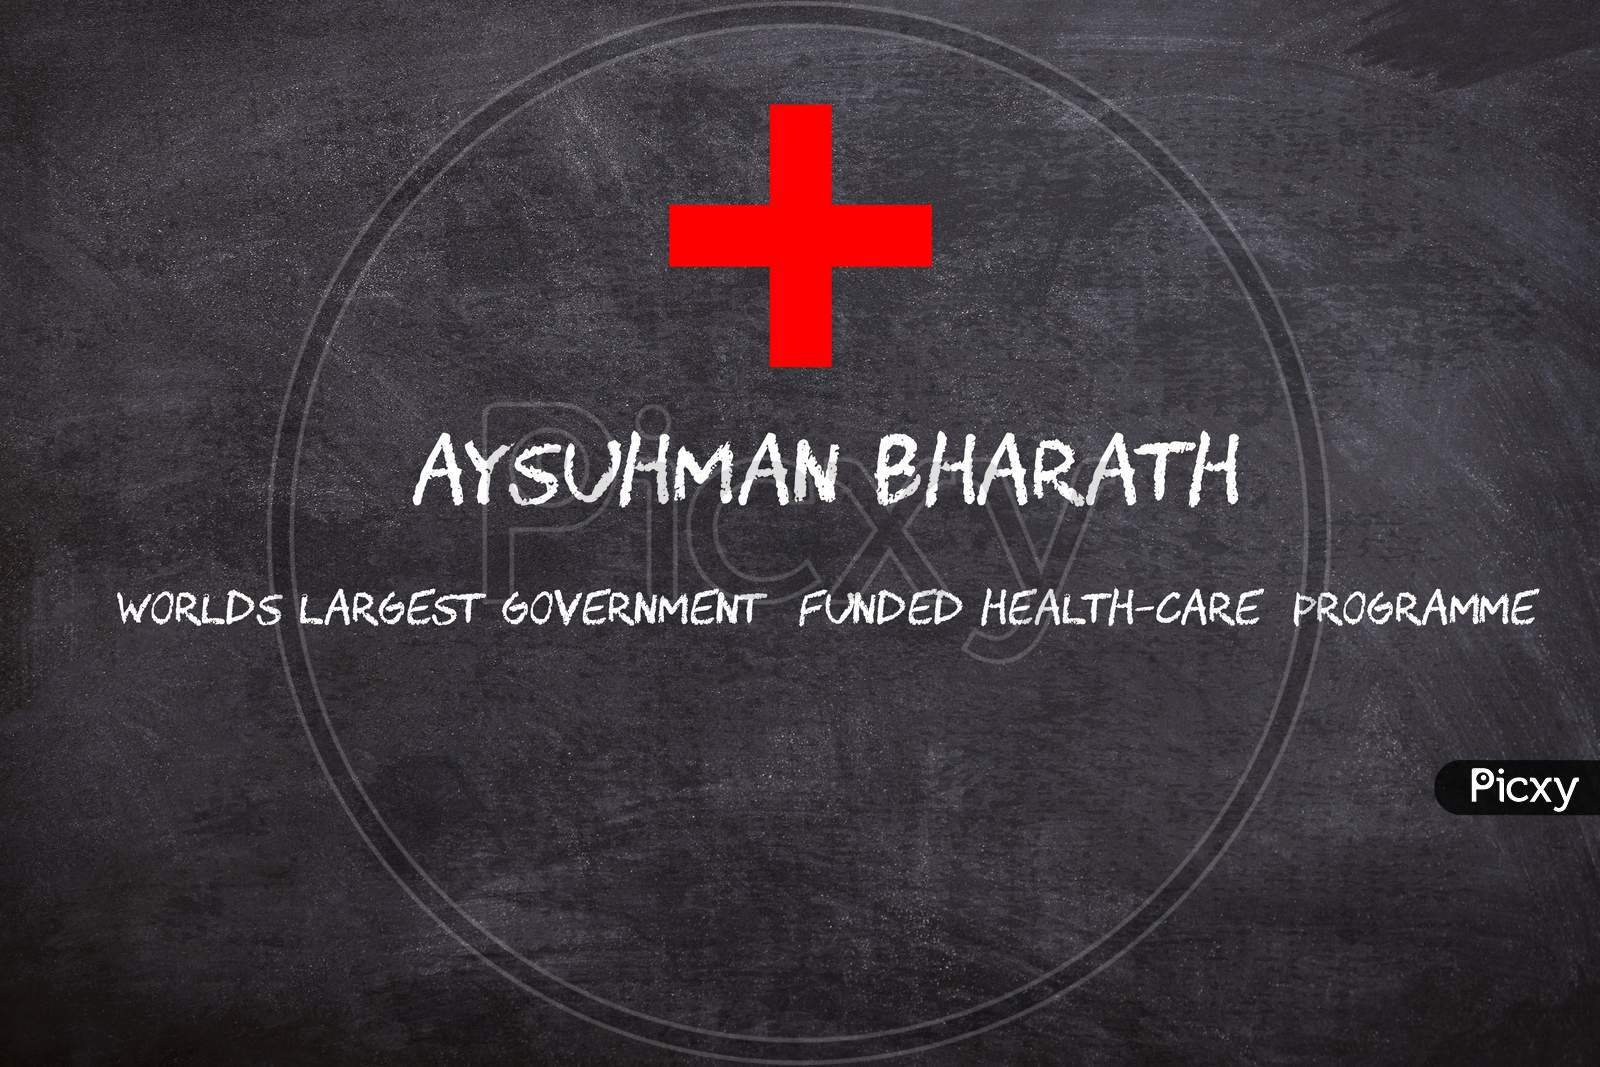 Ayushman Bharath written on a Black Chalk piece board